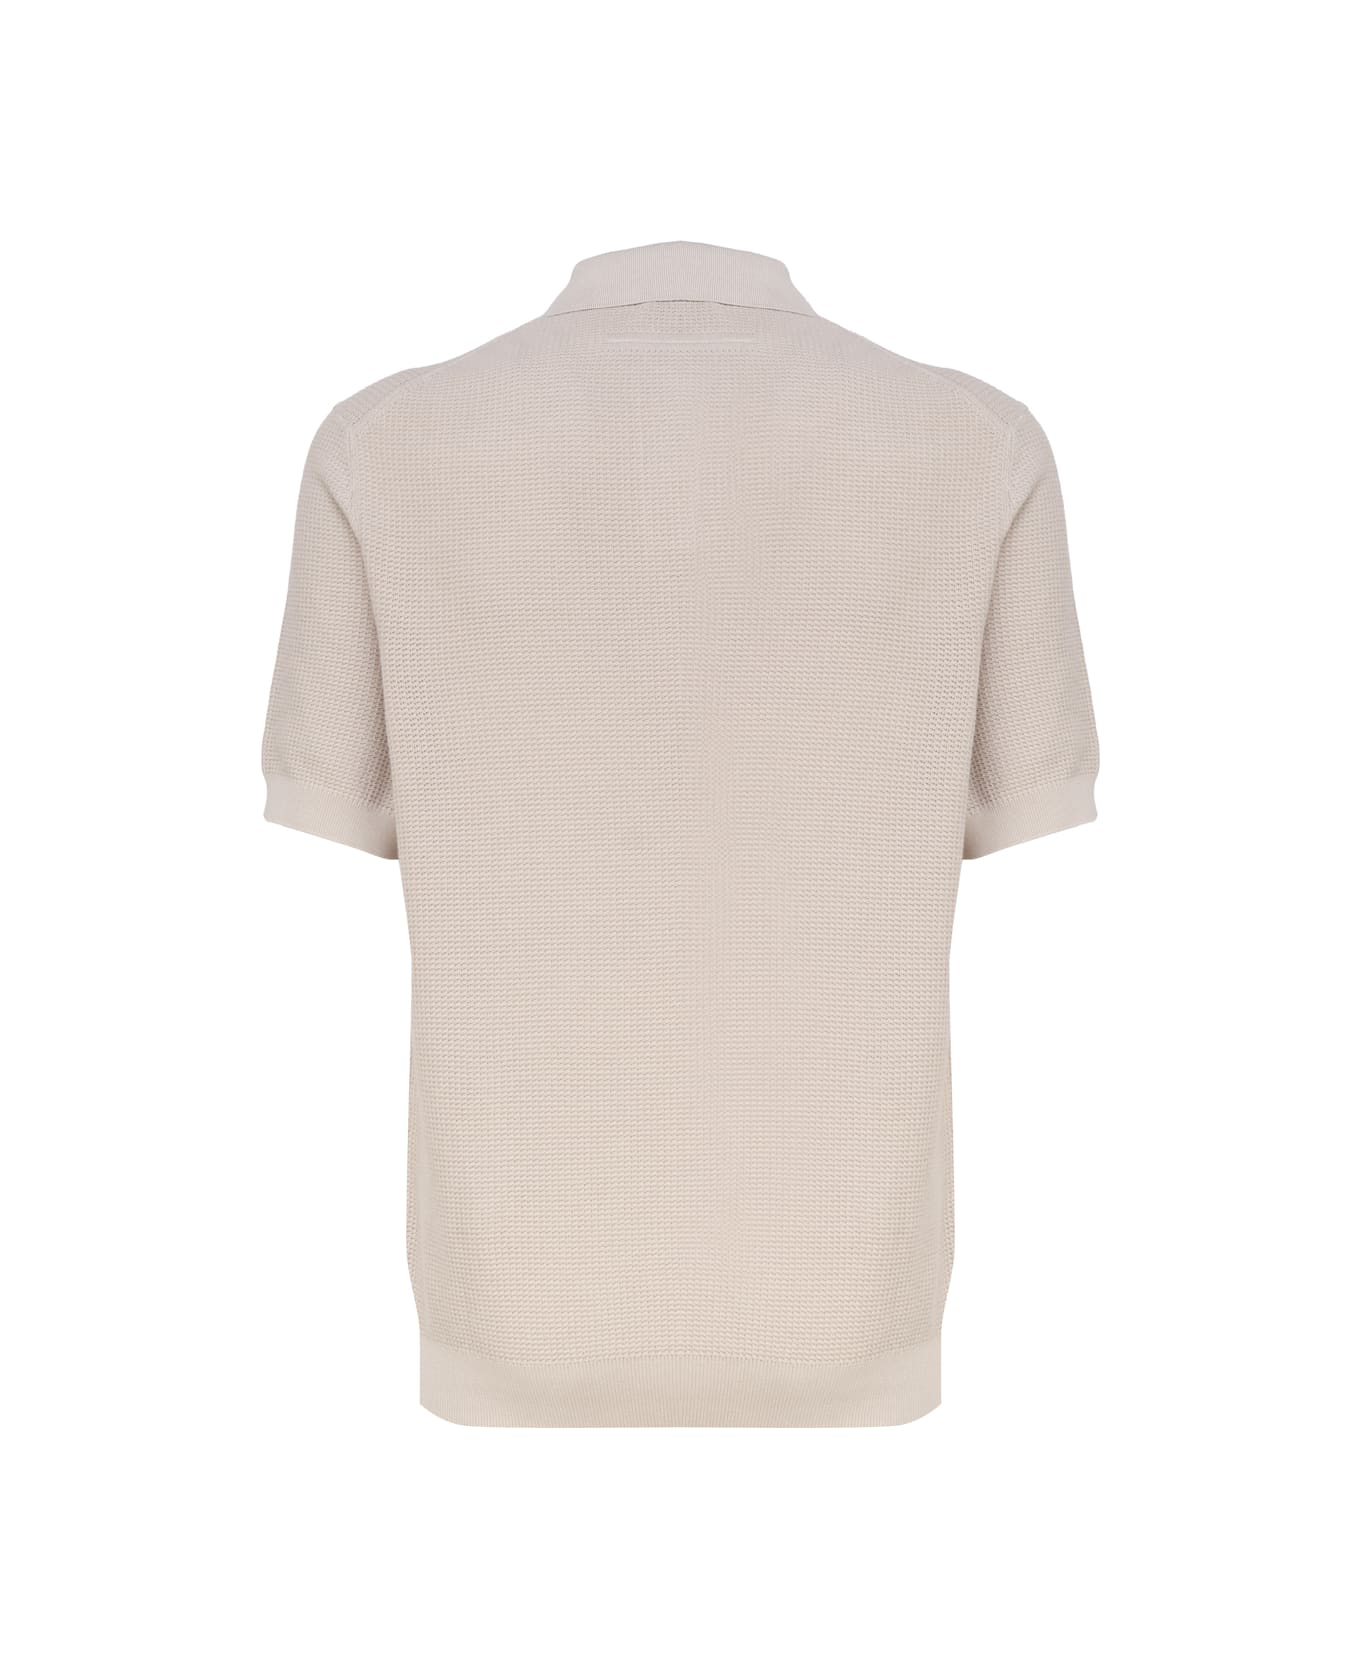 Zegna Cotton Polo Shirt - Beige